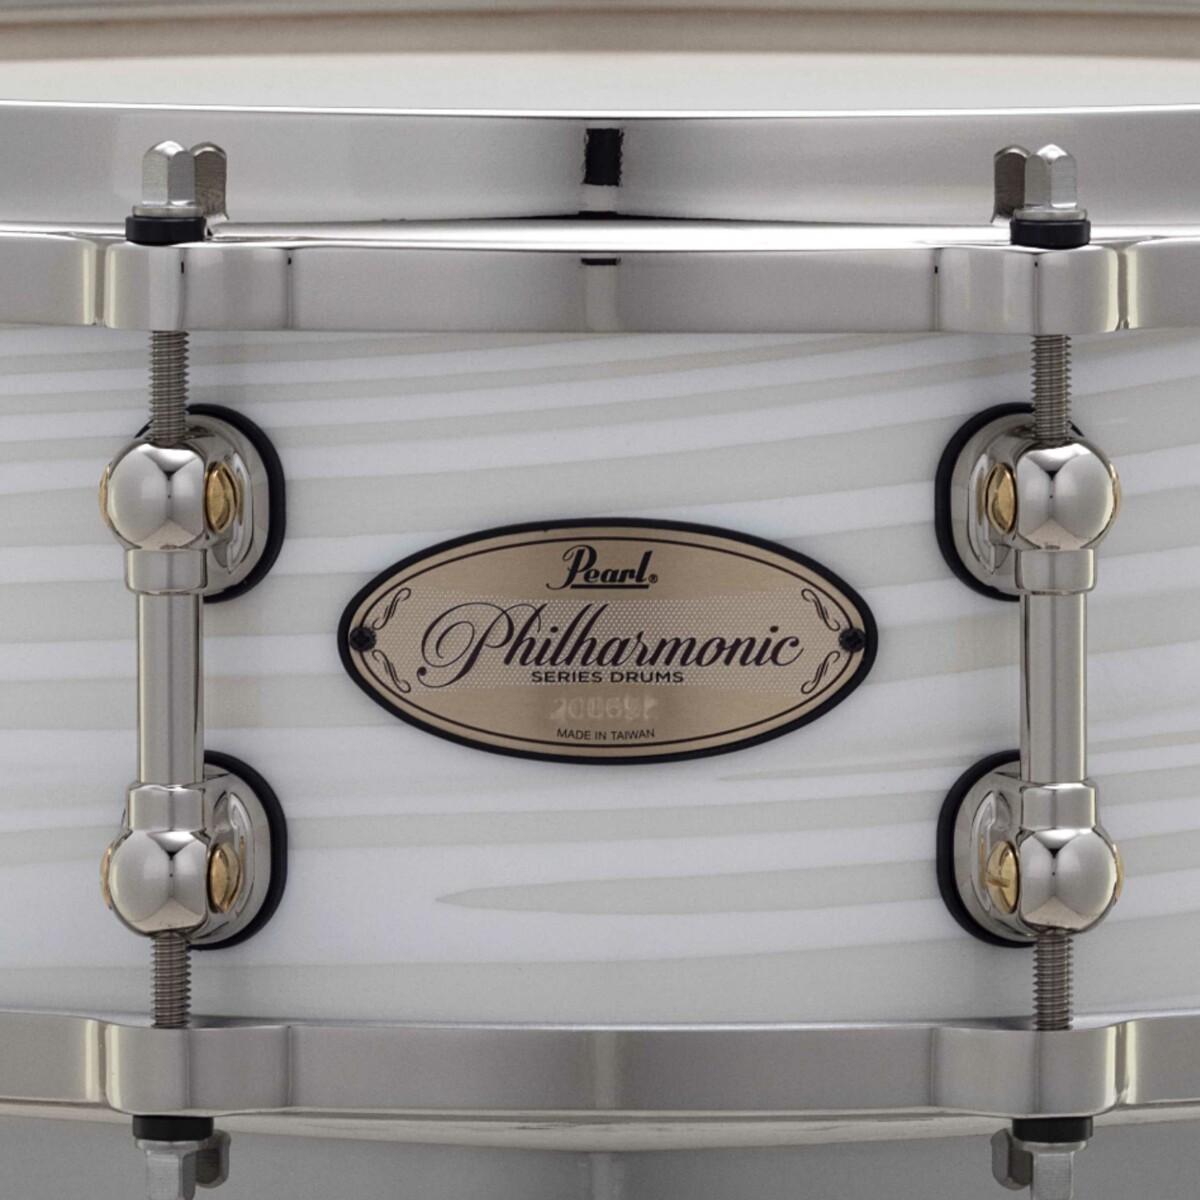 Pearl Philharmonic 75th Anniversary Snare Drum 14x5 Silver White Swirl